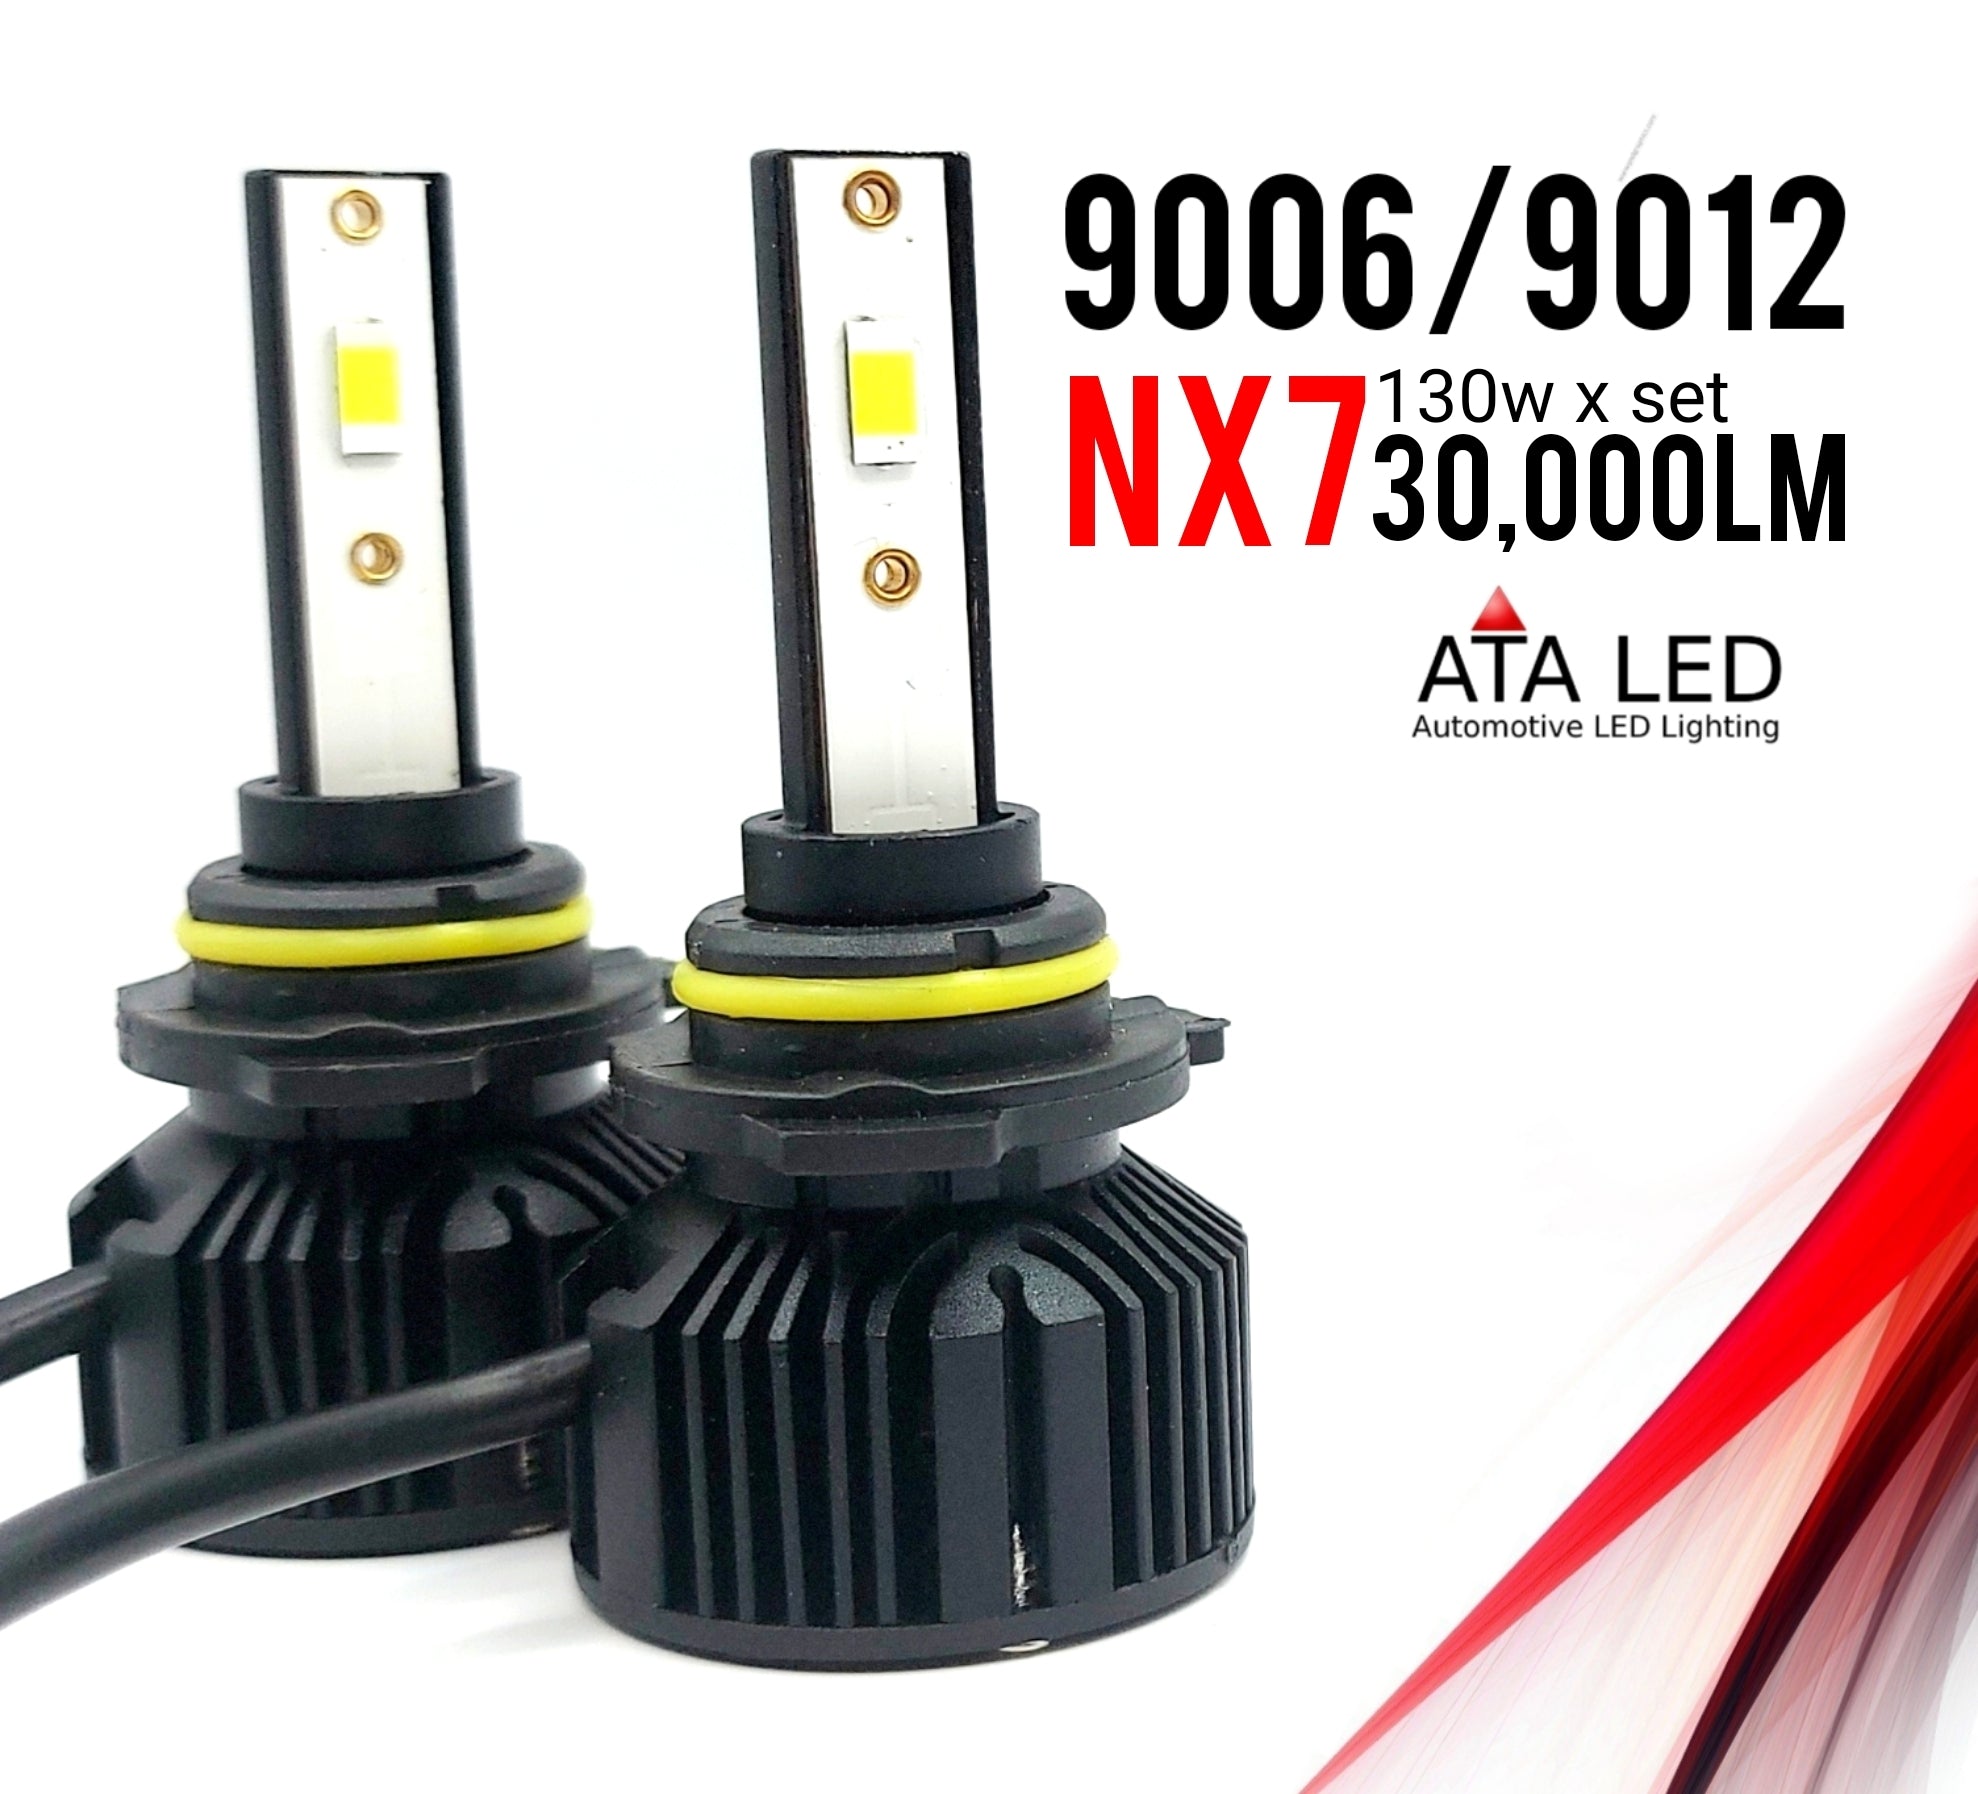 *NEW VERSION*  9006/HB4/9012 - NX7 - 30,000LM 6000k White 2 x ATALED Headlight bulbs